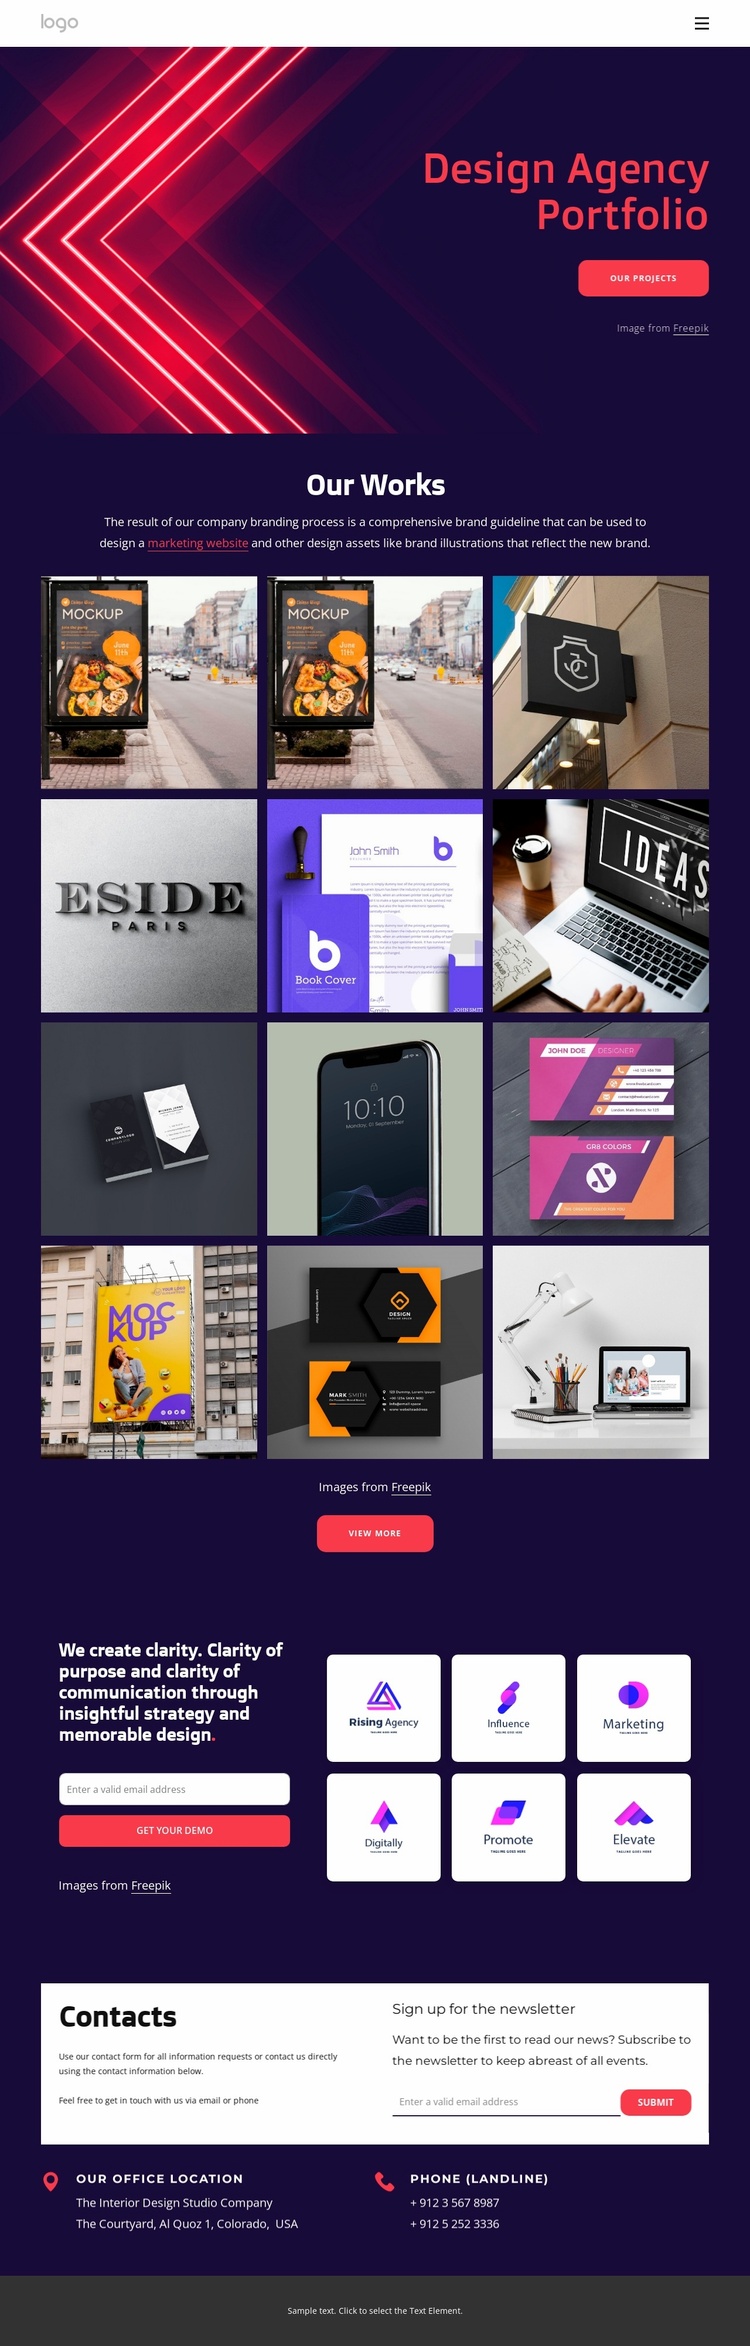 Design agency portfolio Landing Page